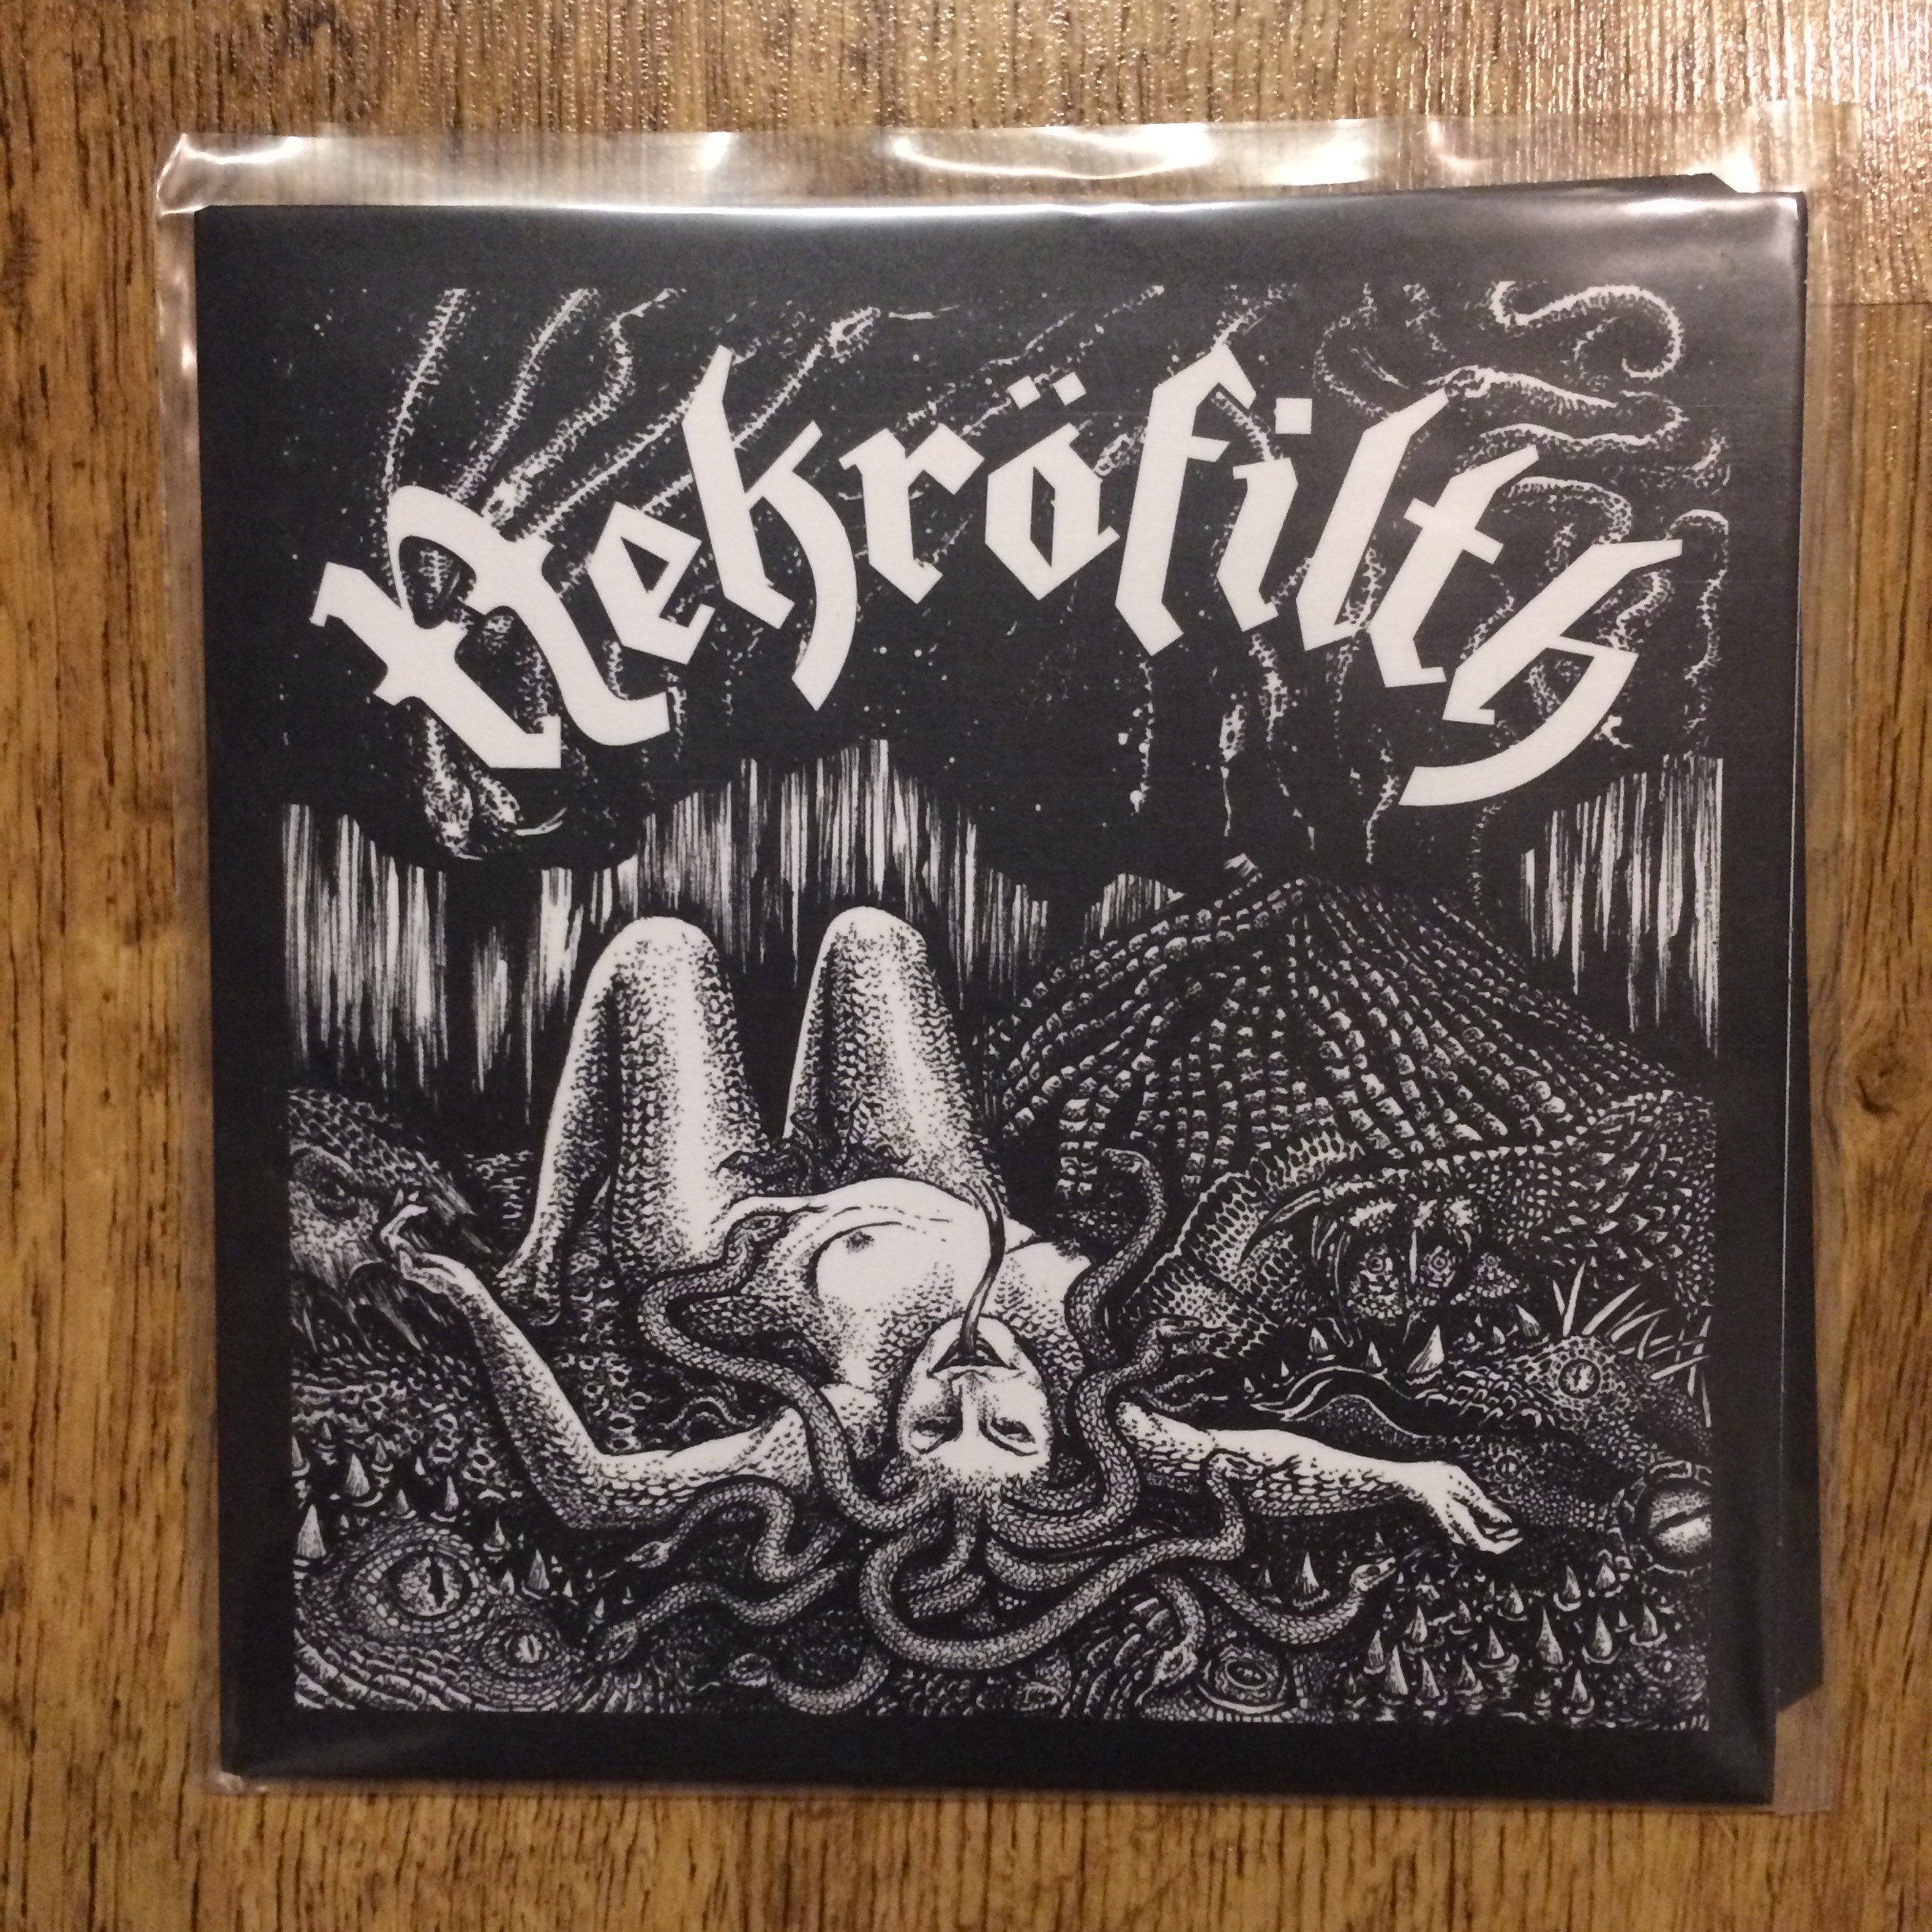 Photo of the Nekrofilth - "Love me like a Reptile" EP (Black vinyl)